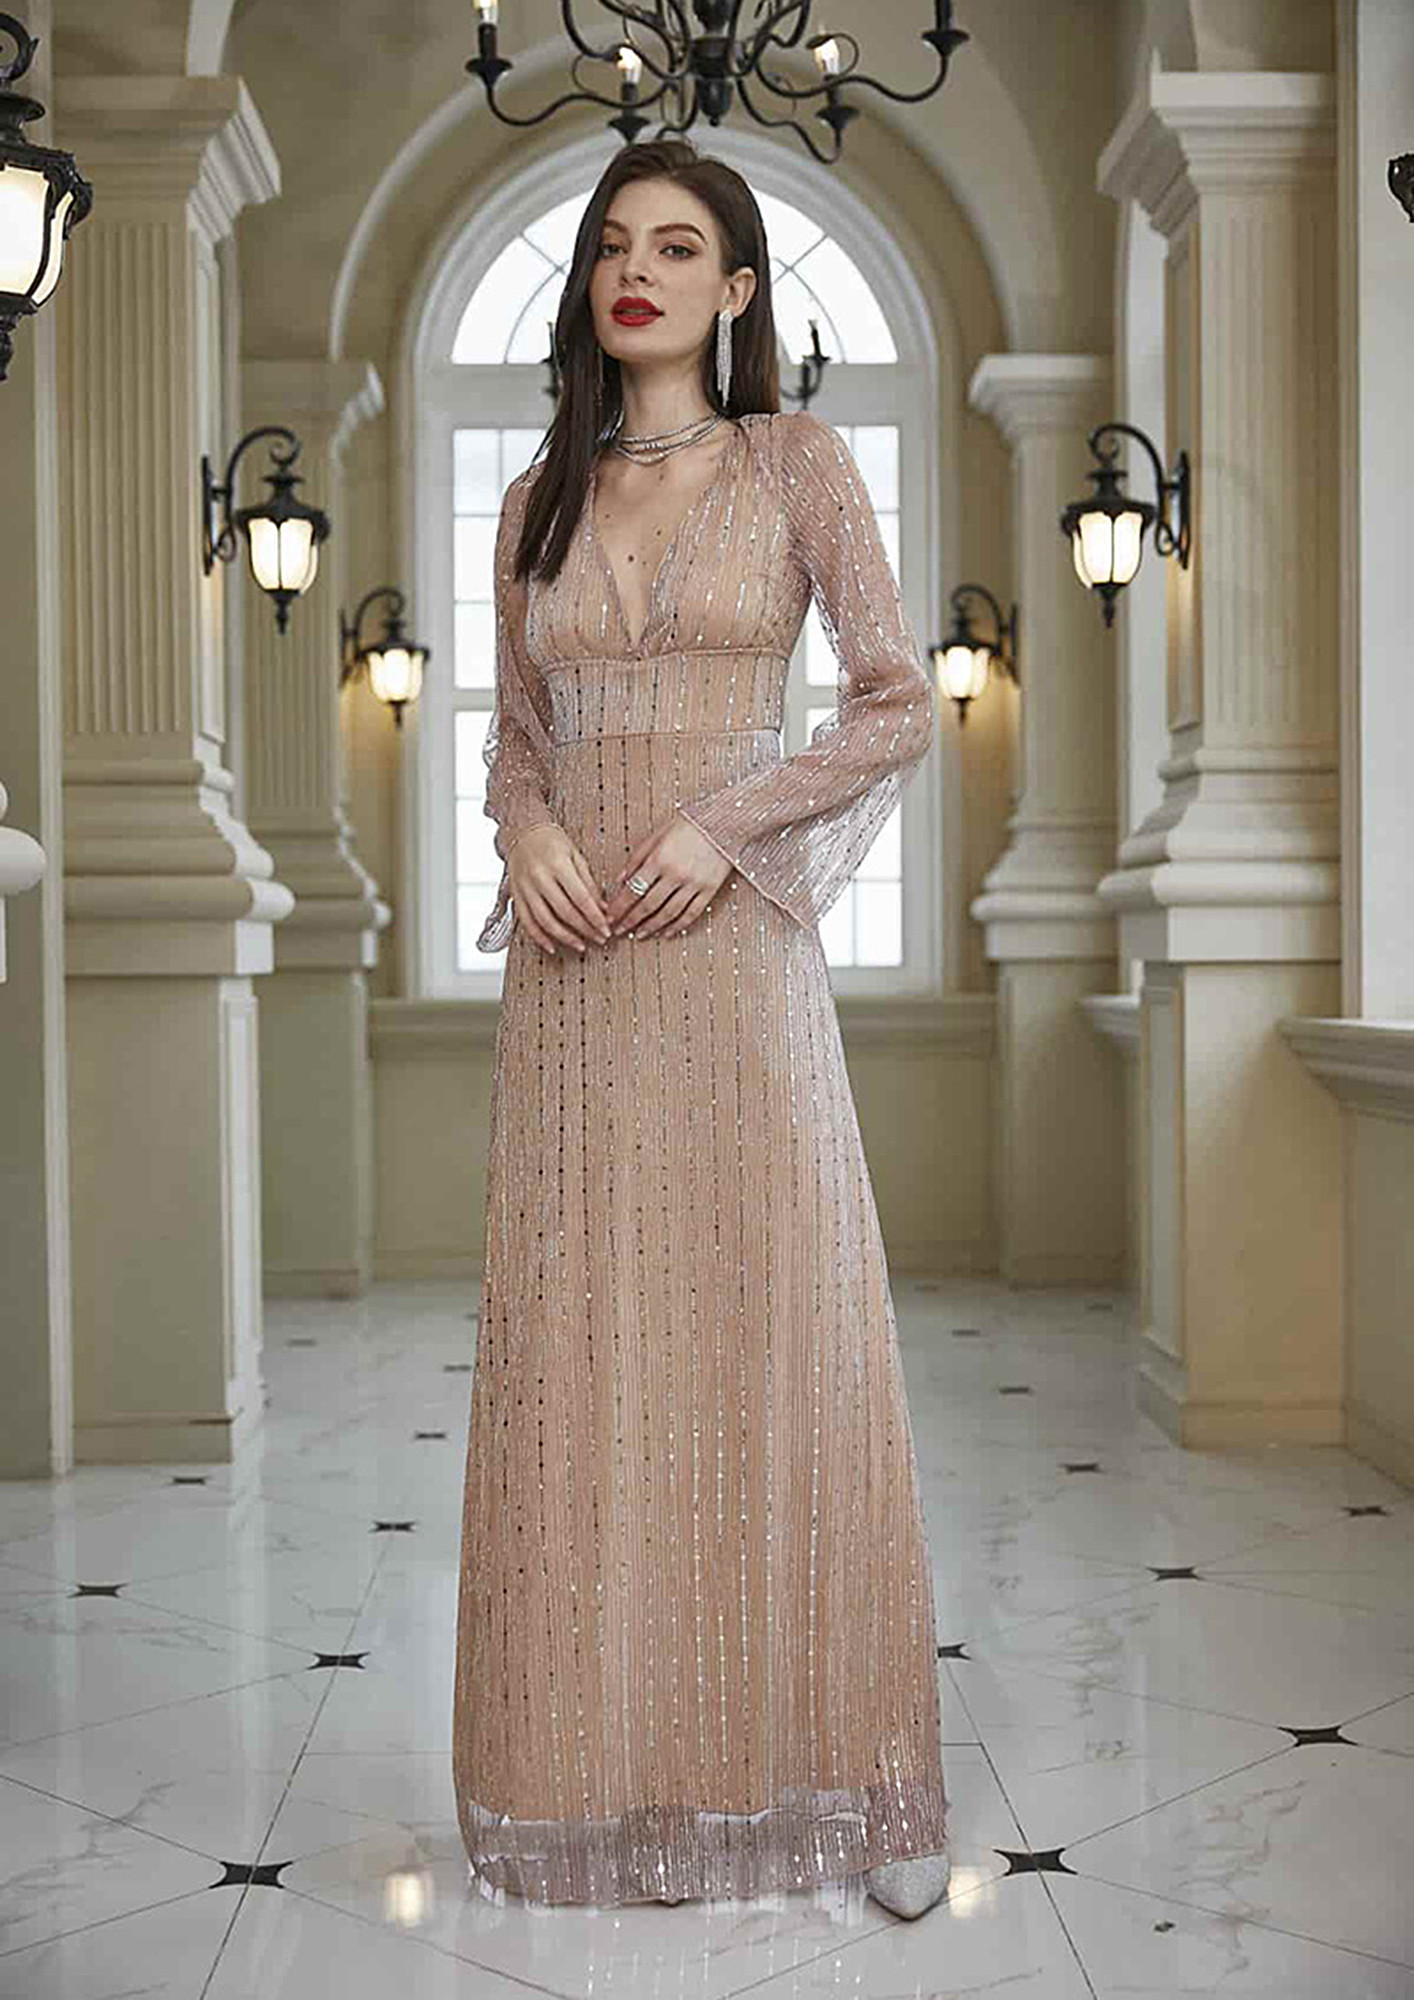 India Lace Formal Dress - PO816 - Tania Olsen Designs